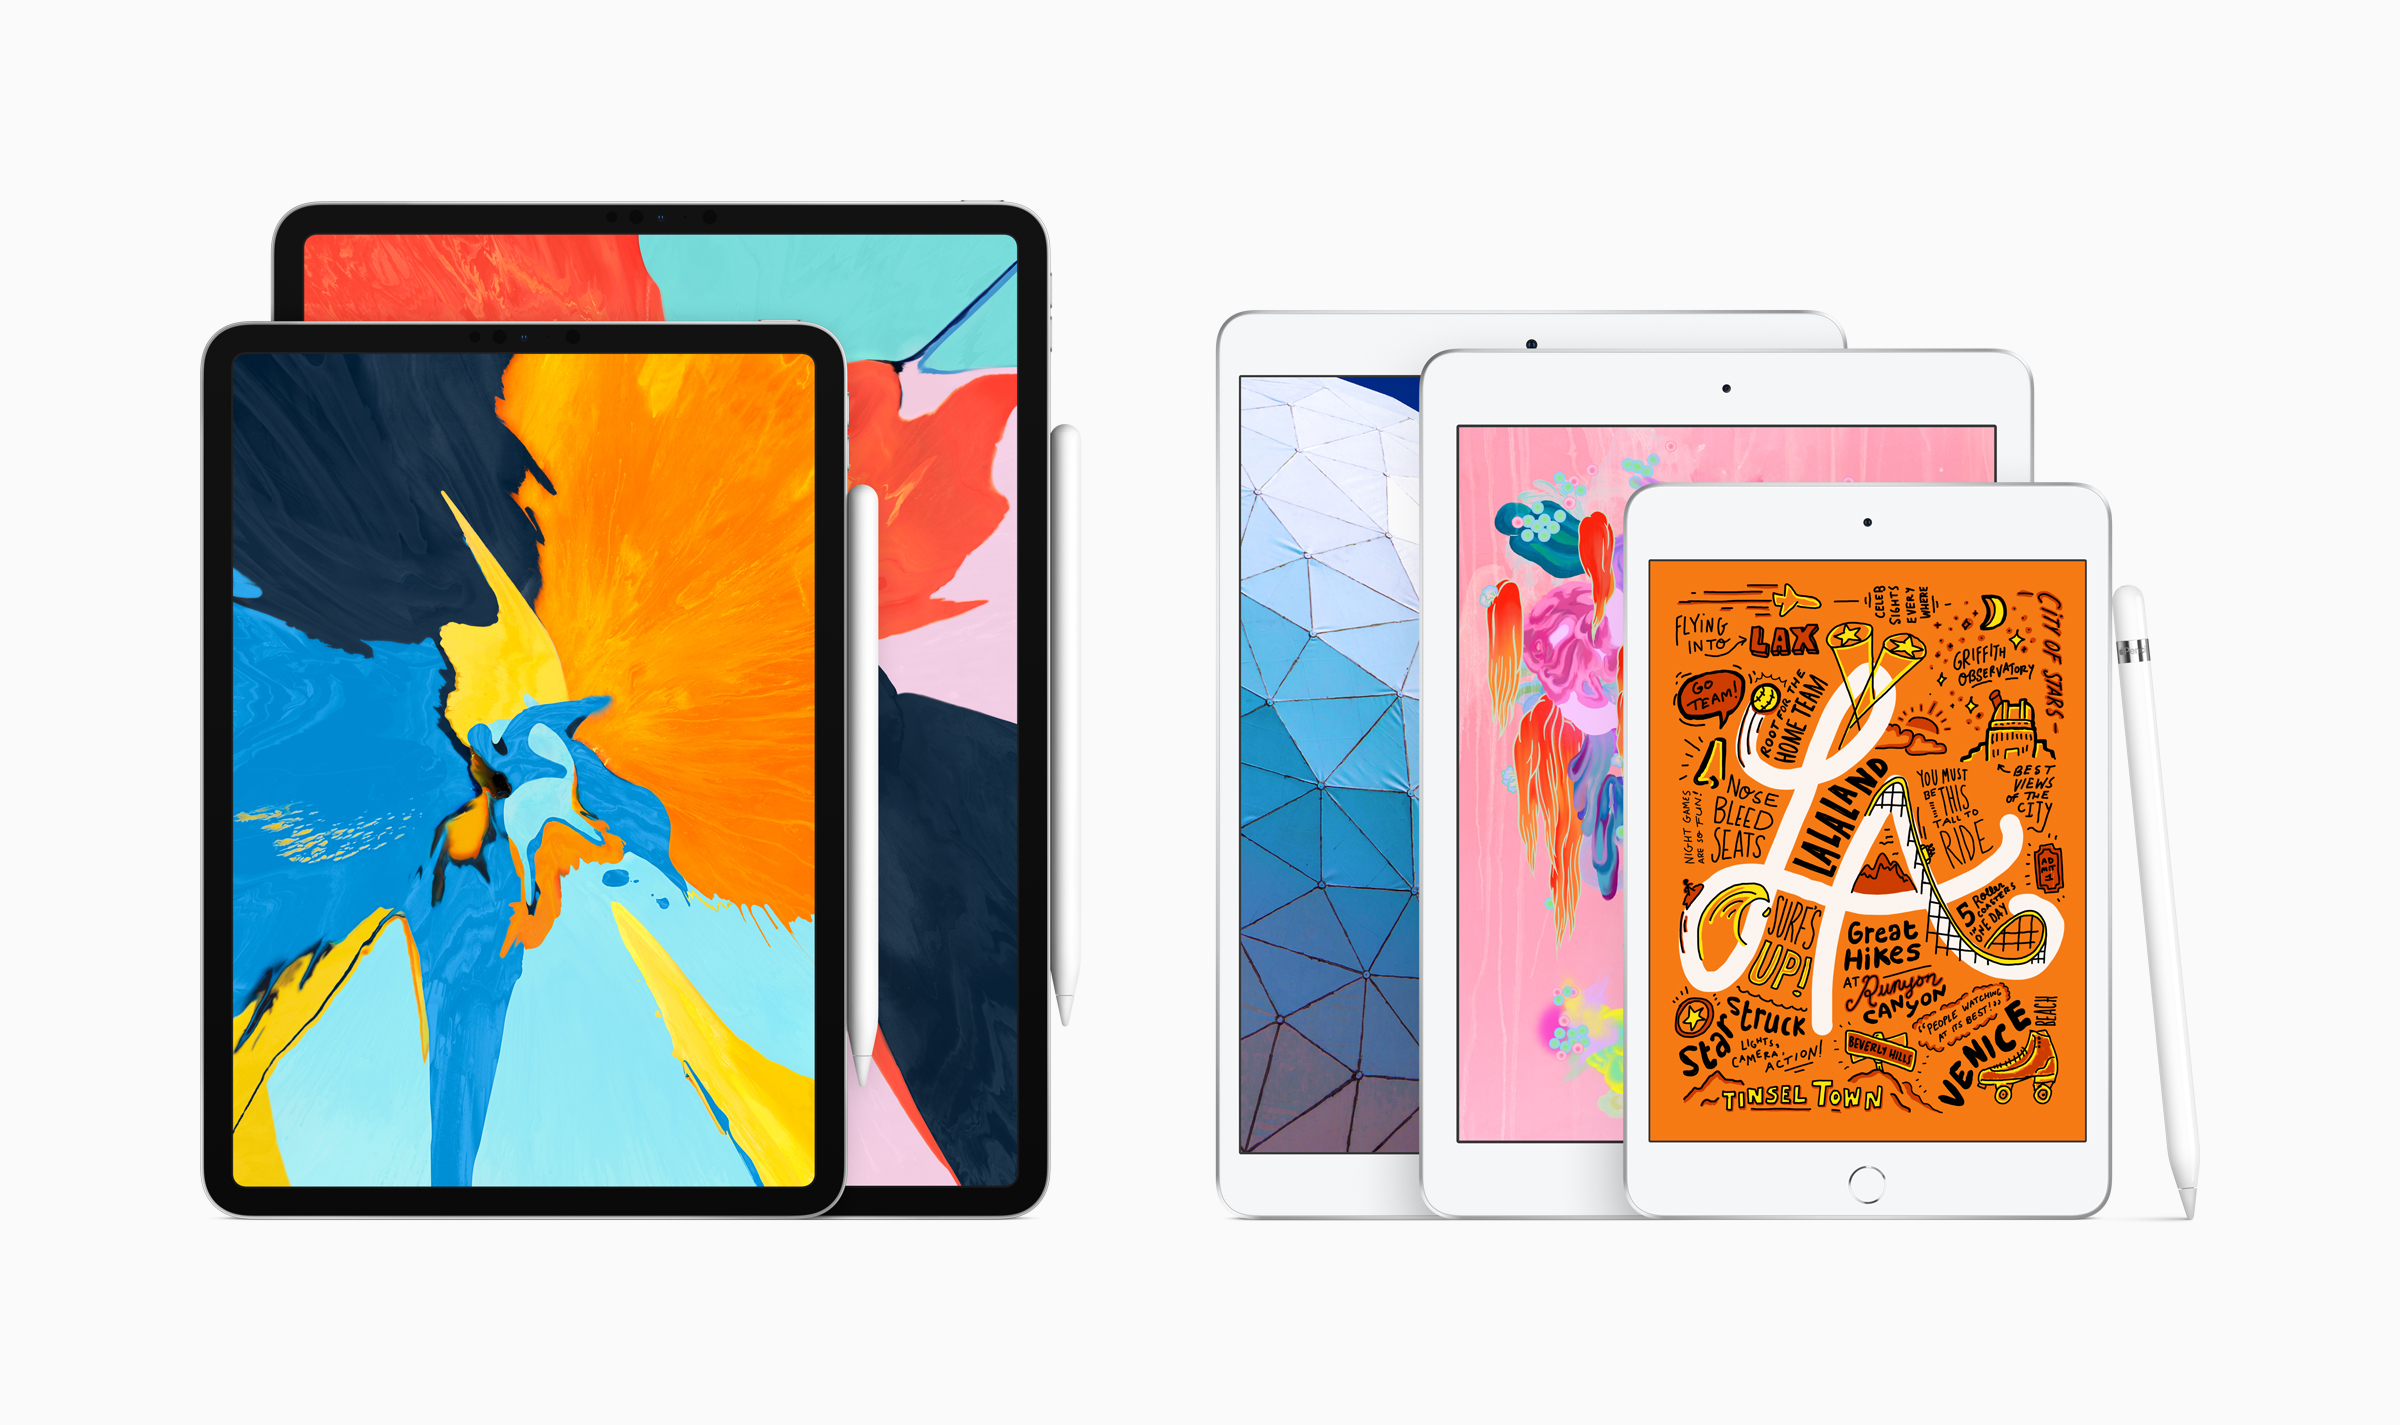 Noile iPad Air şi iPad Mini